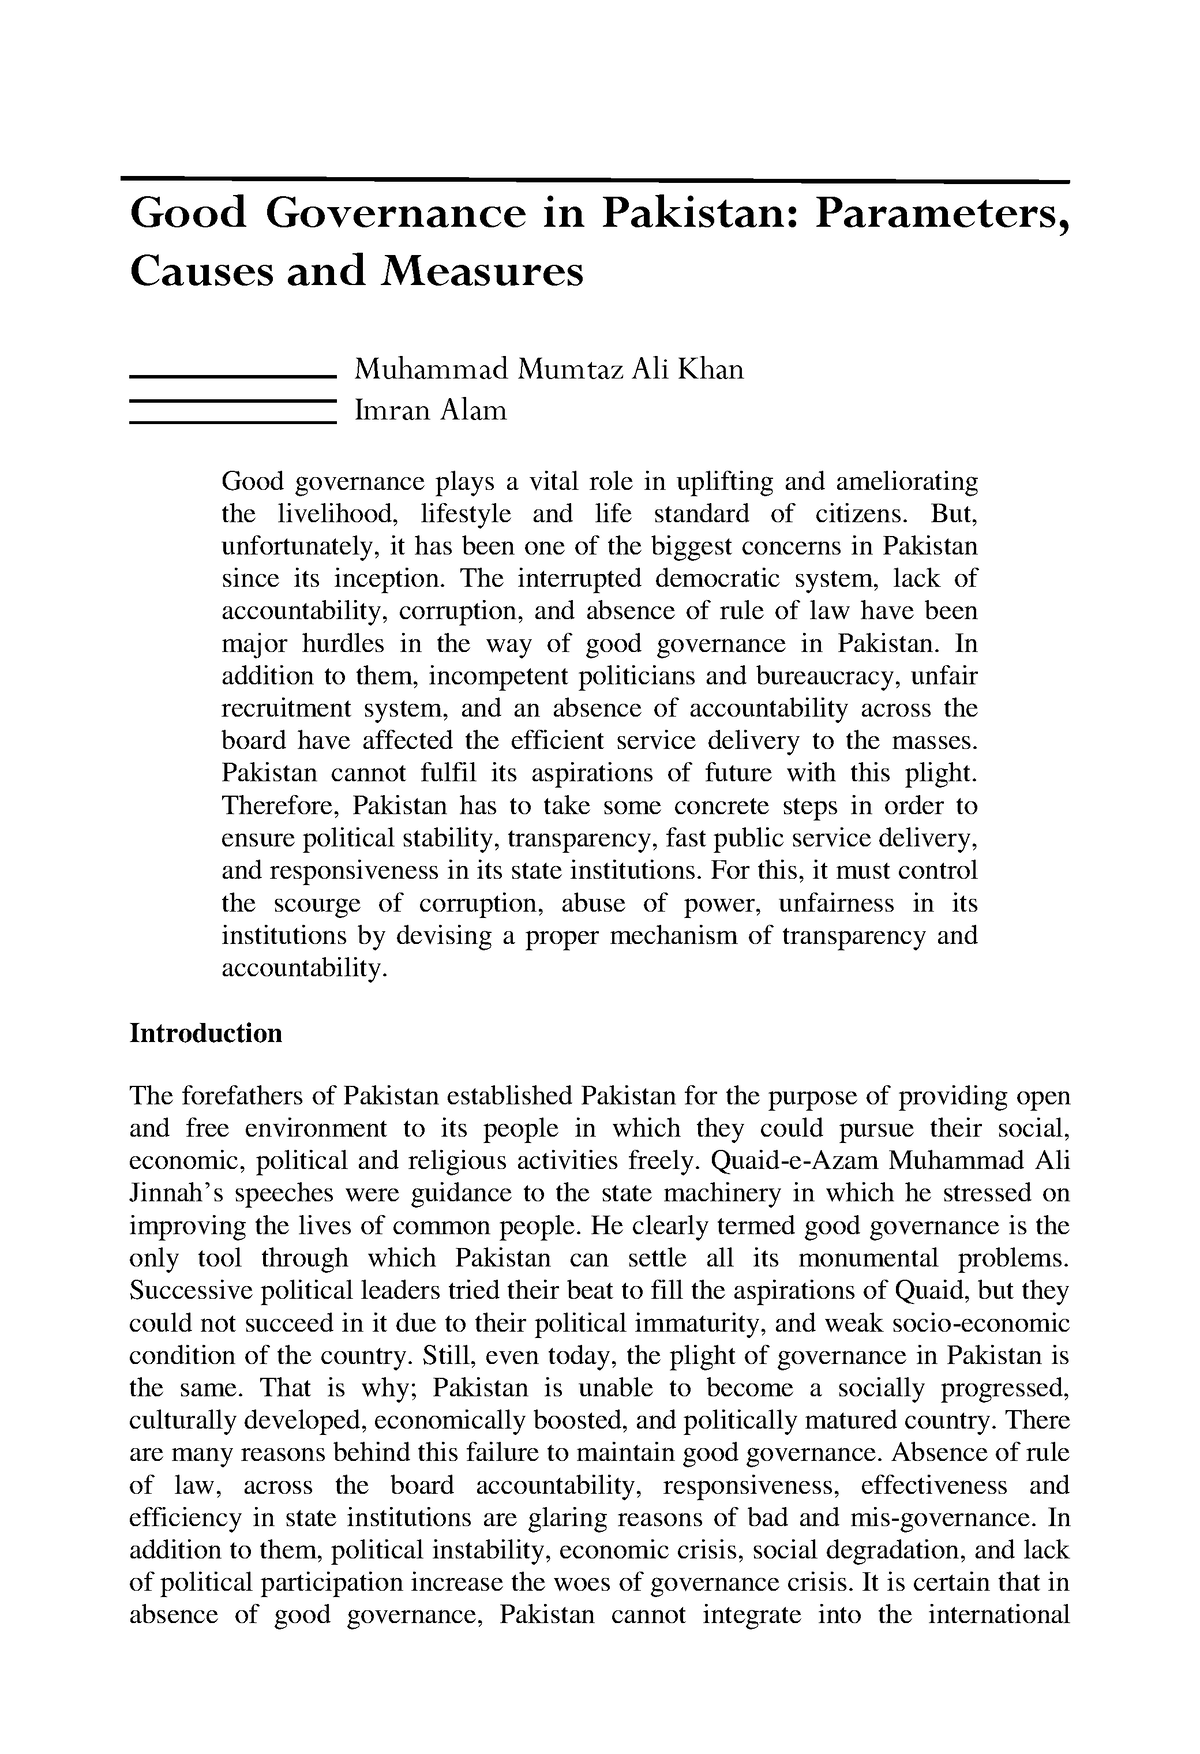 crisis of good governance in pakistan essay pdf